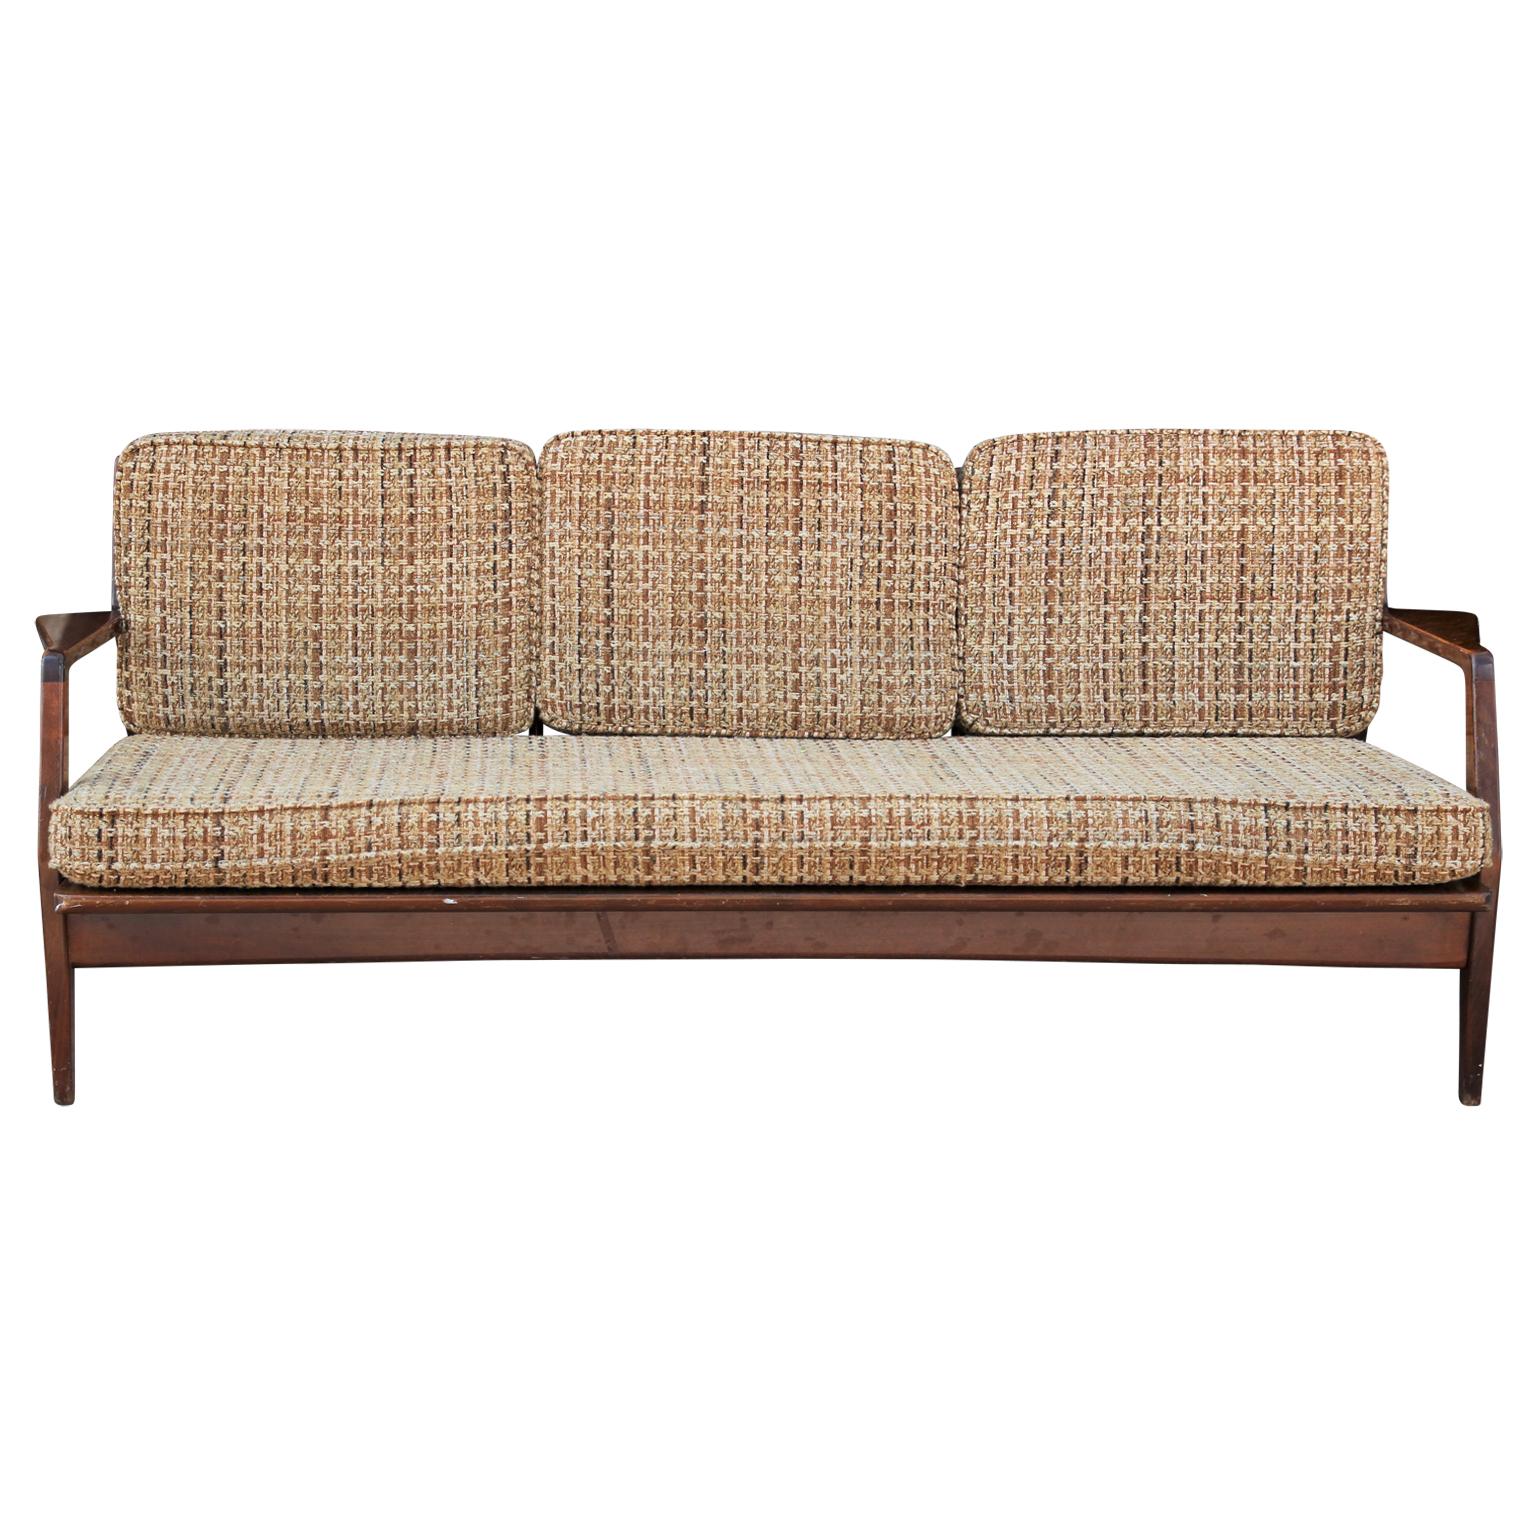 Modern Danish Ib Kofod-Larsen slat back walnut color sofa. COM ready. Original upholstery is in nice vintage condition. Frame should be restored for perfection.